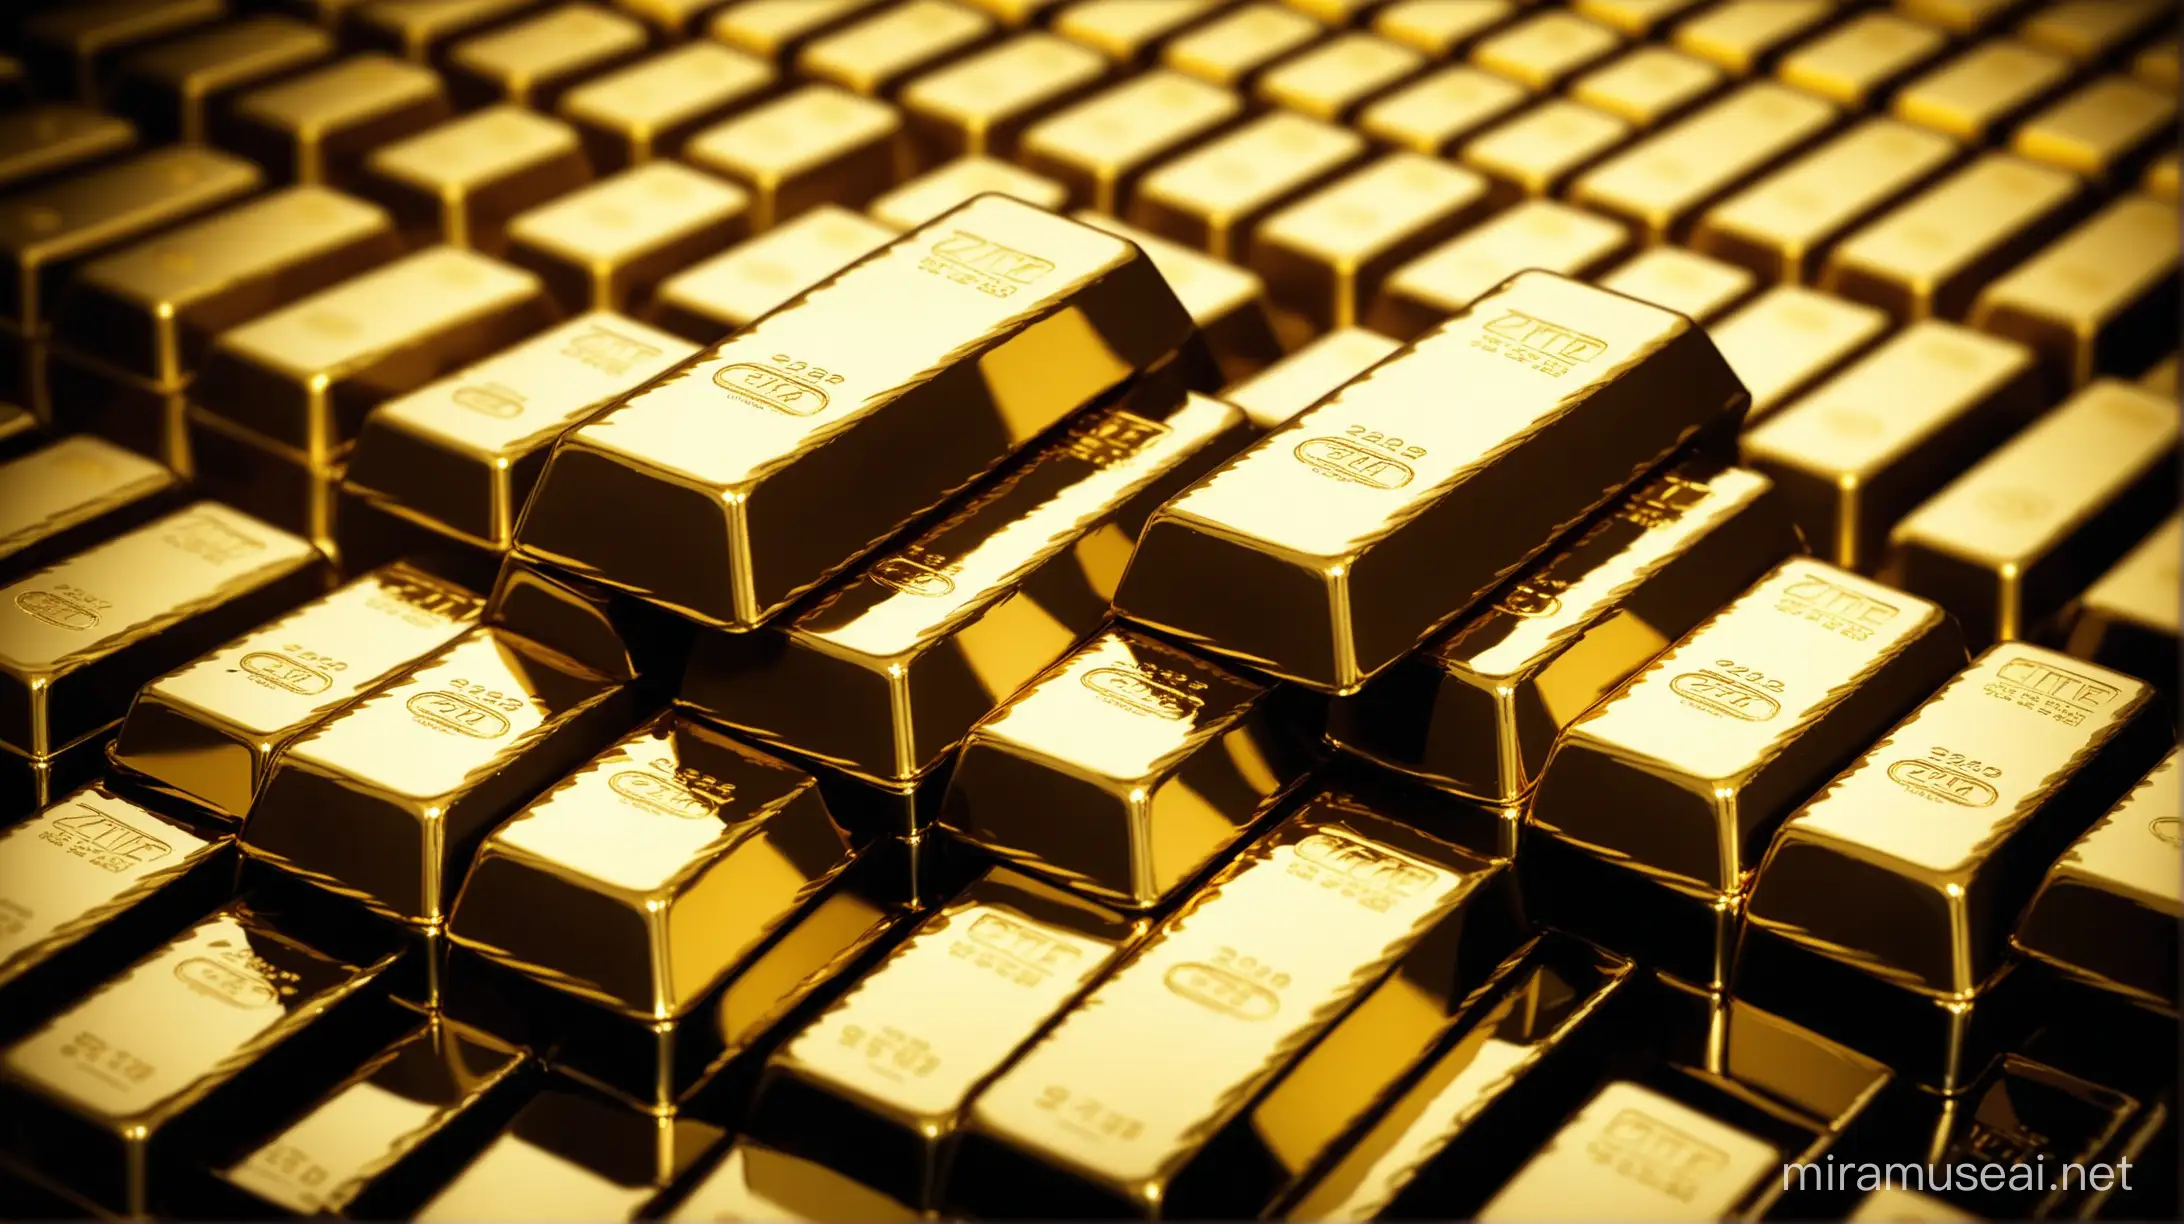 Luxurious 24K Gold Bars on Black Background